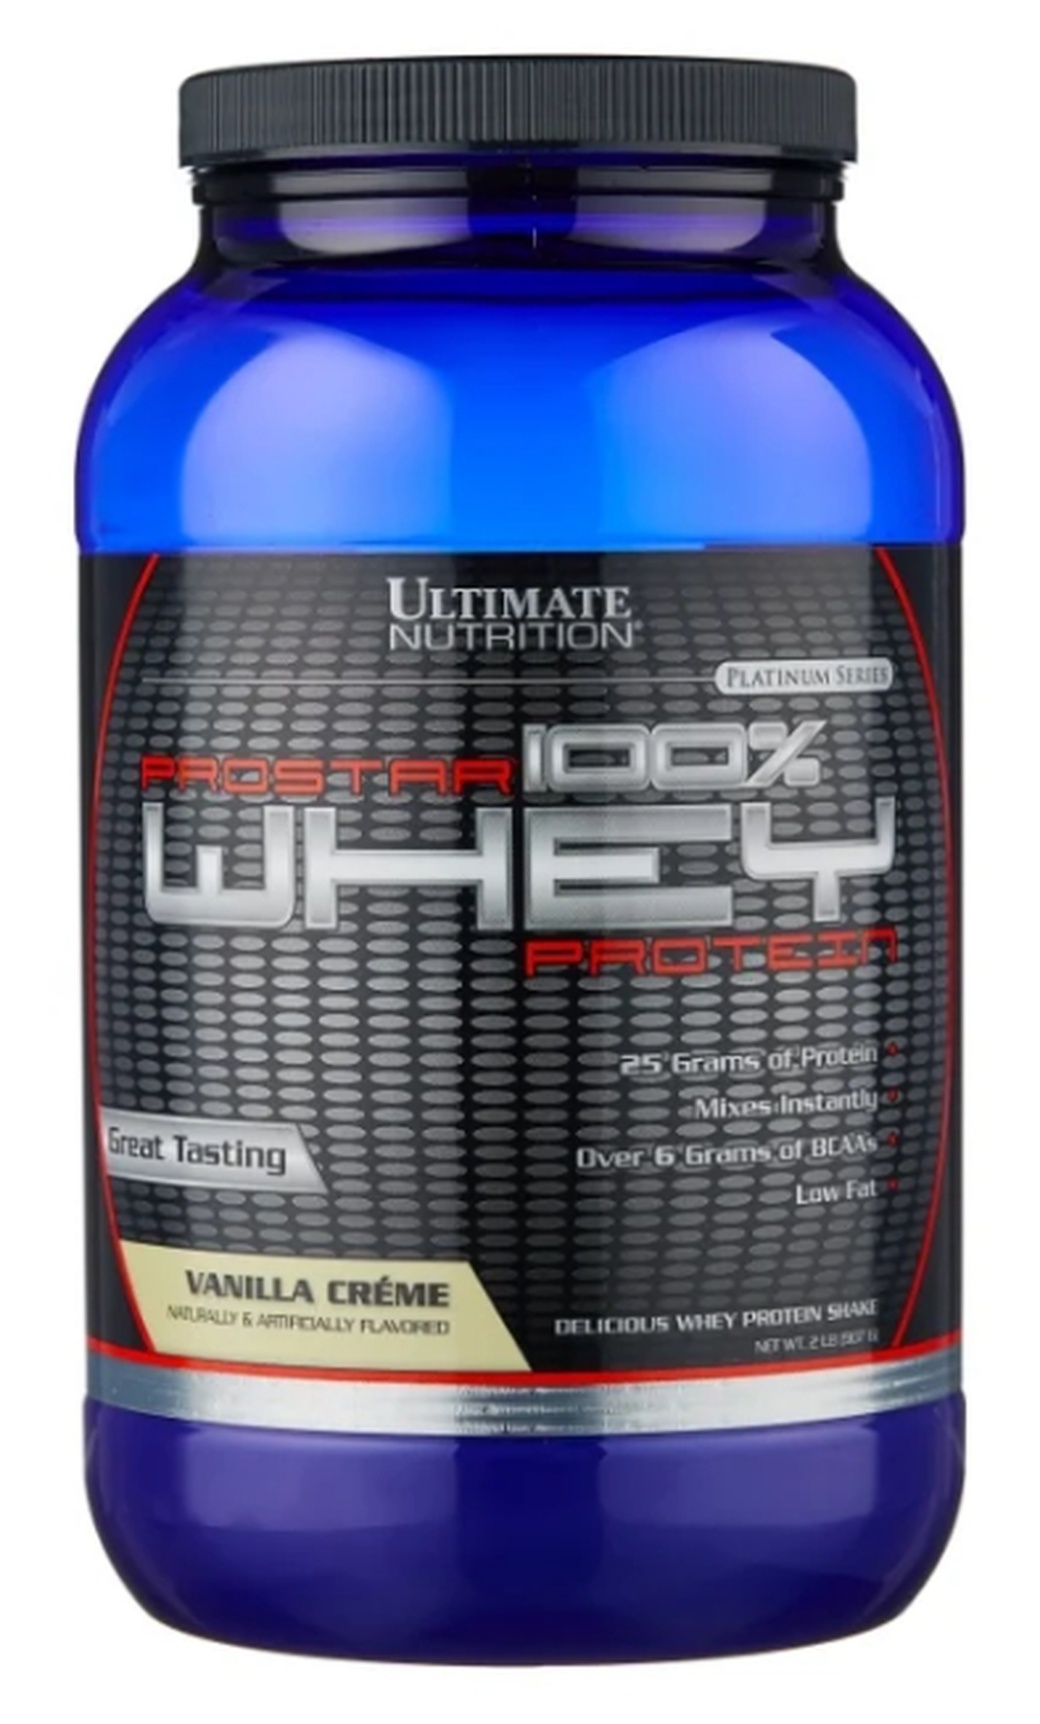 Протеин Ultimate Nutrition Prostar 100% Whey Protein (907 г) ванильный крем фото